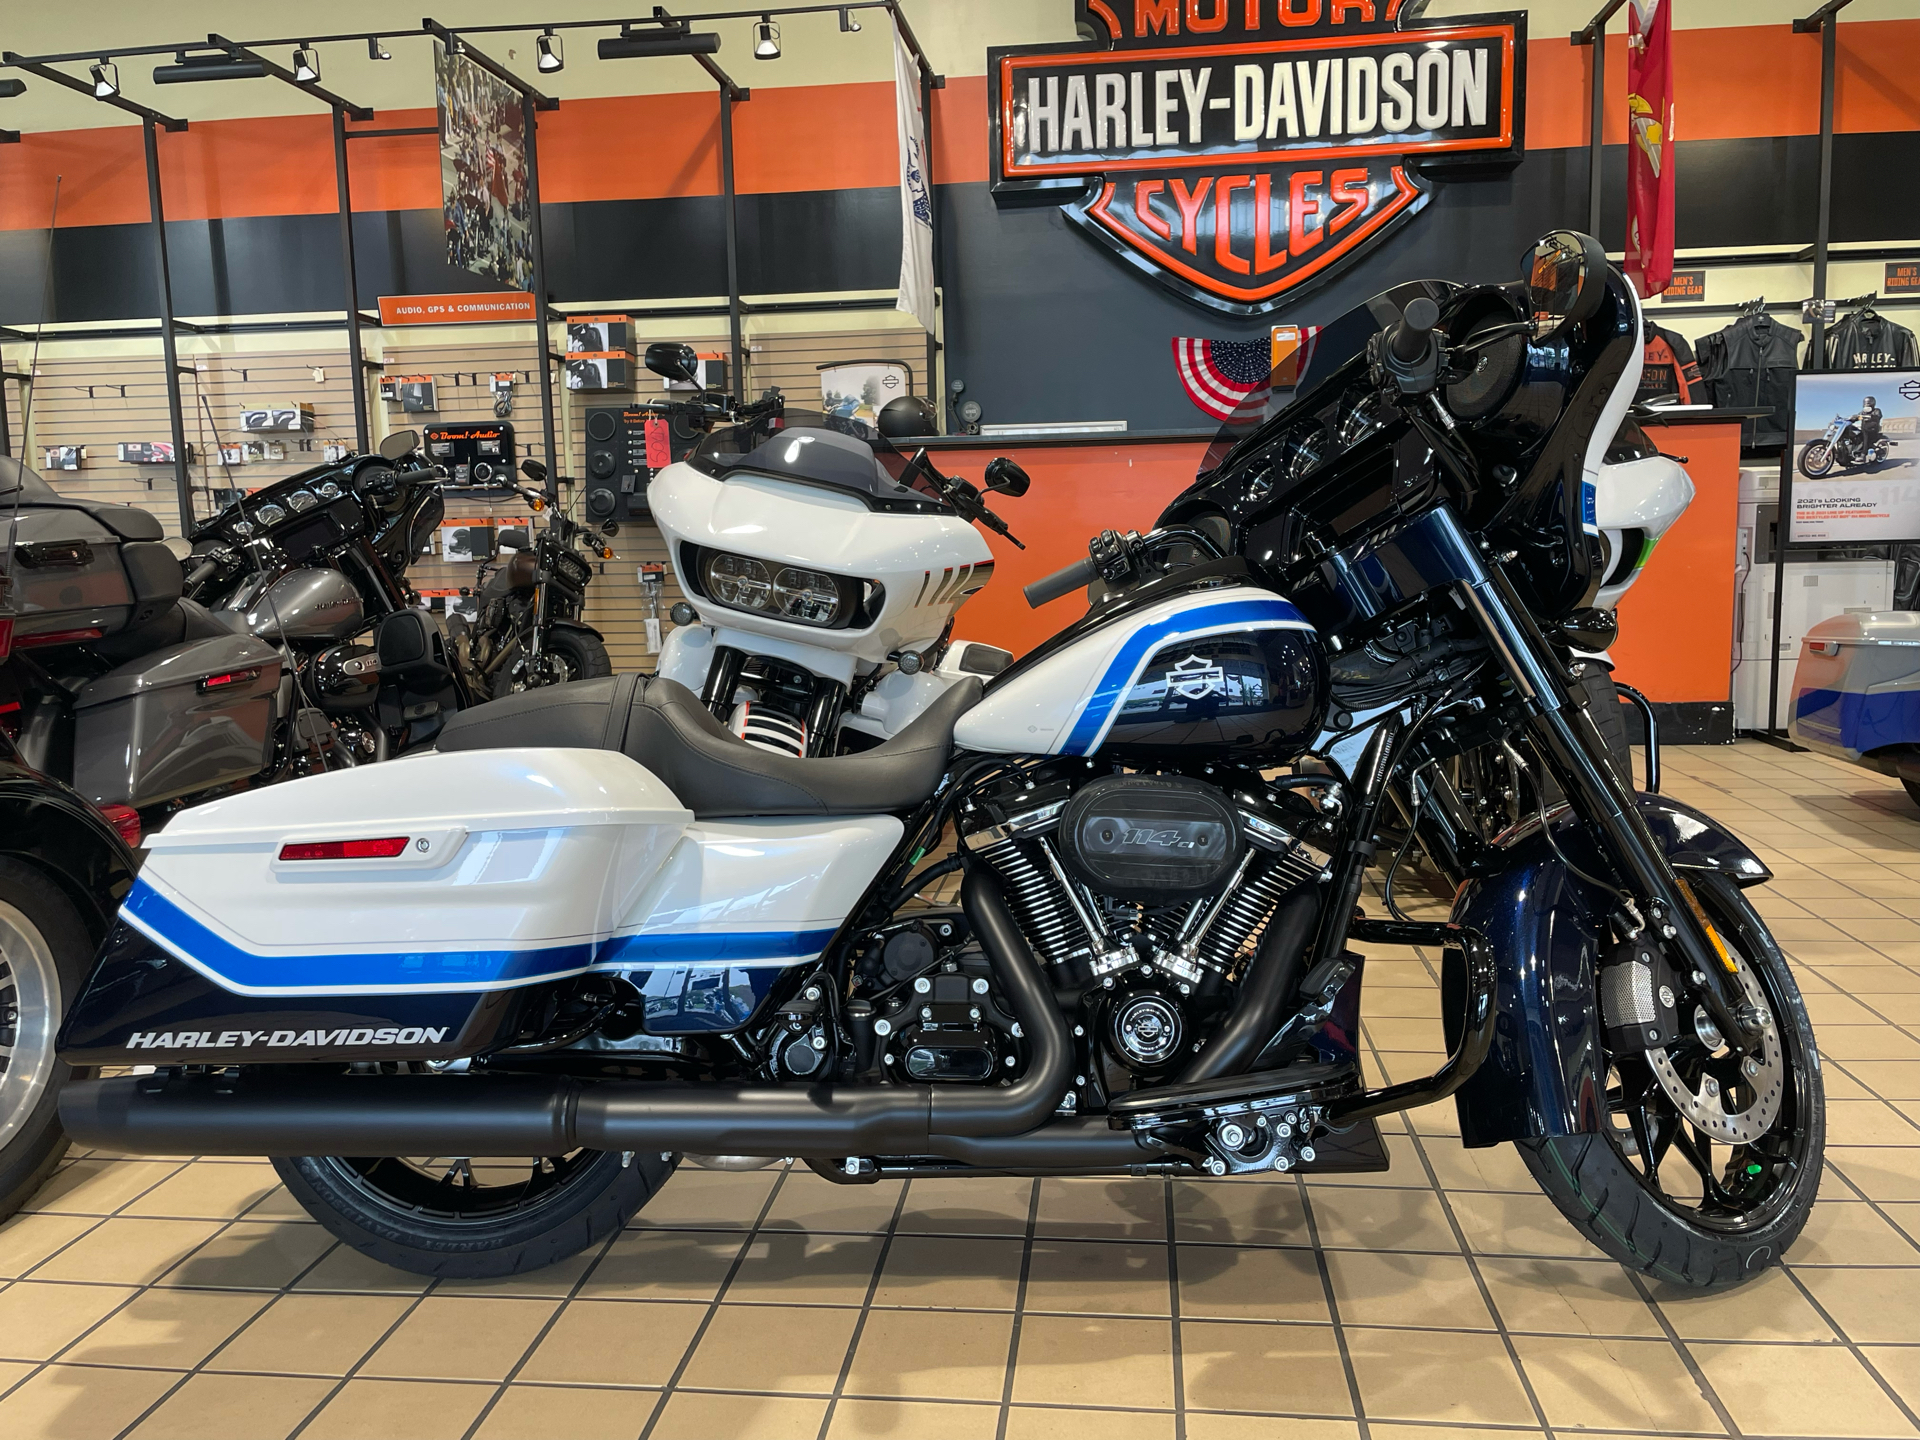 New 2021 Harley Davidson Street Glide Special Arctic Blast Black Pearl Option Motorcycles In Dumfries Va 653887